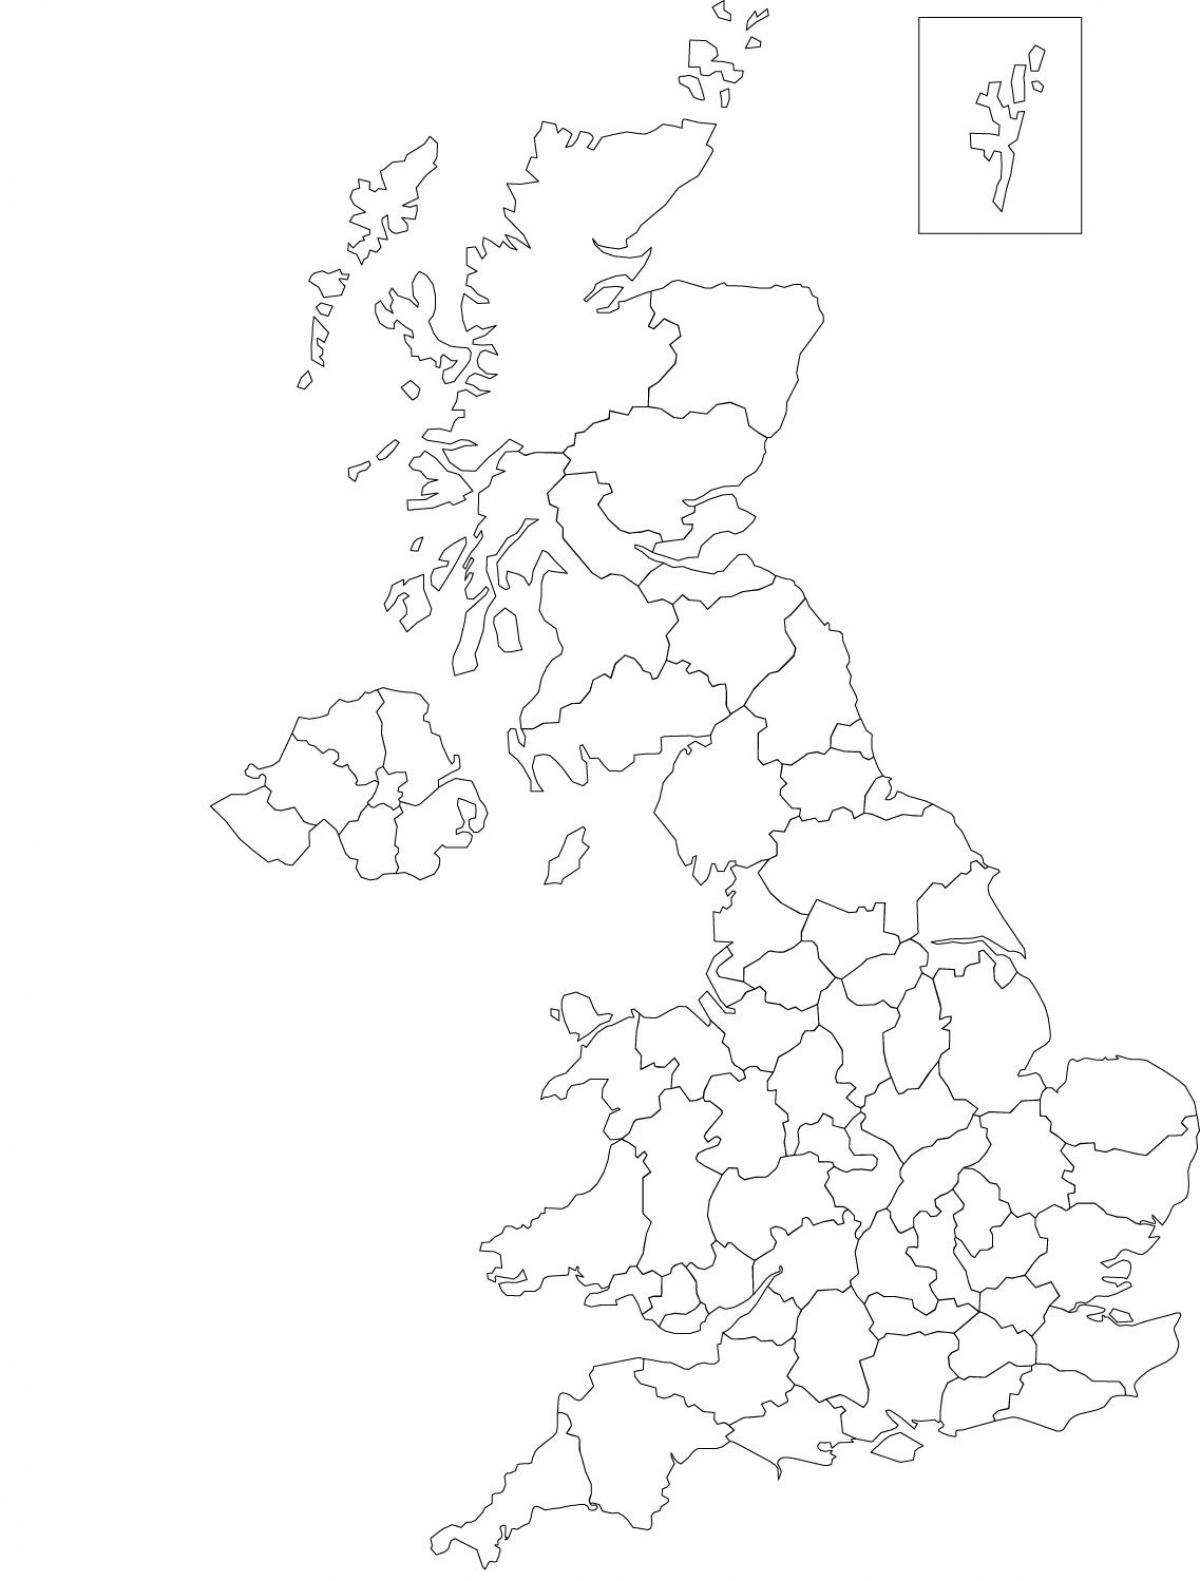 Mapa konturowa Zjednoczonego Królestwa (UK)